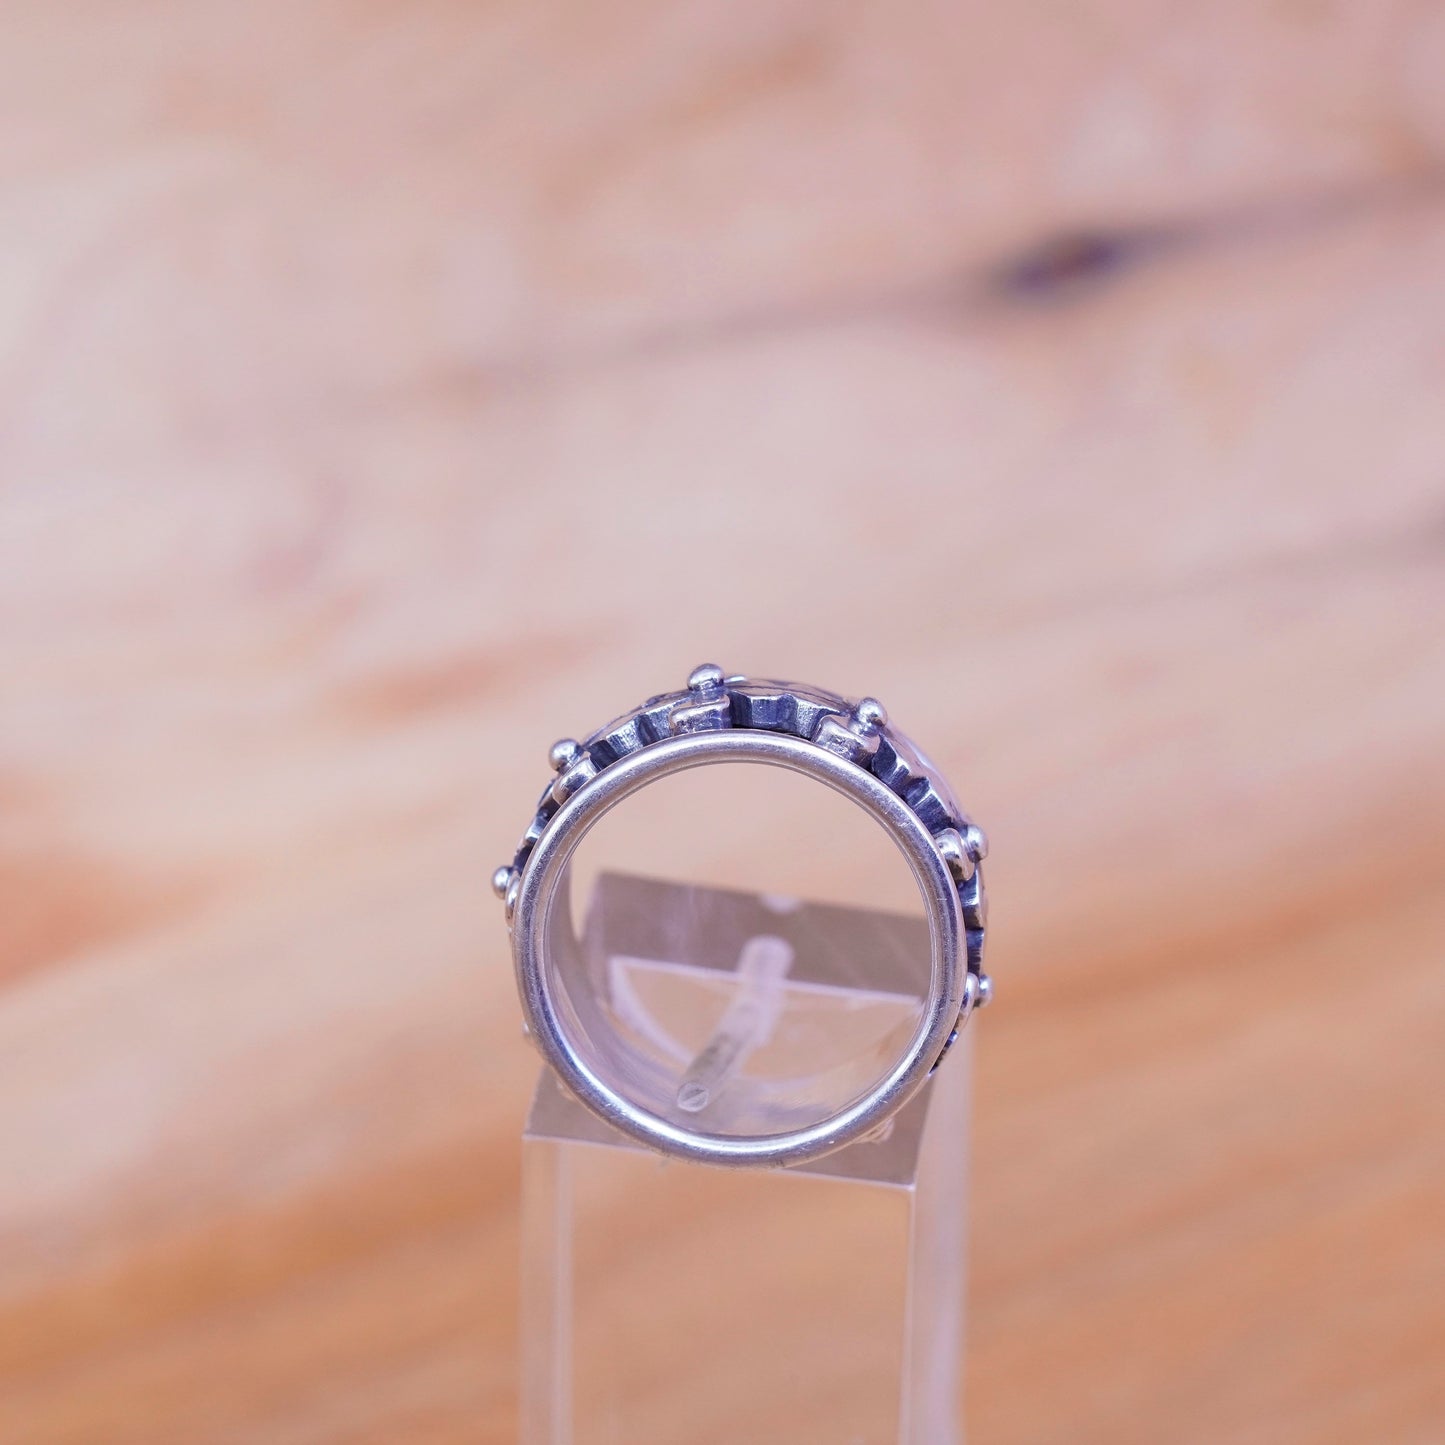 Size 6.5, vintage Sterling silver prayer ring, 925 spinner flower band